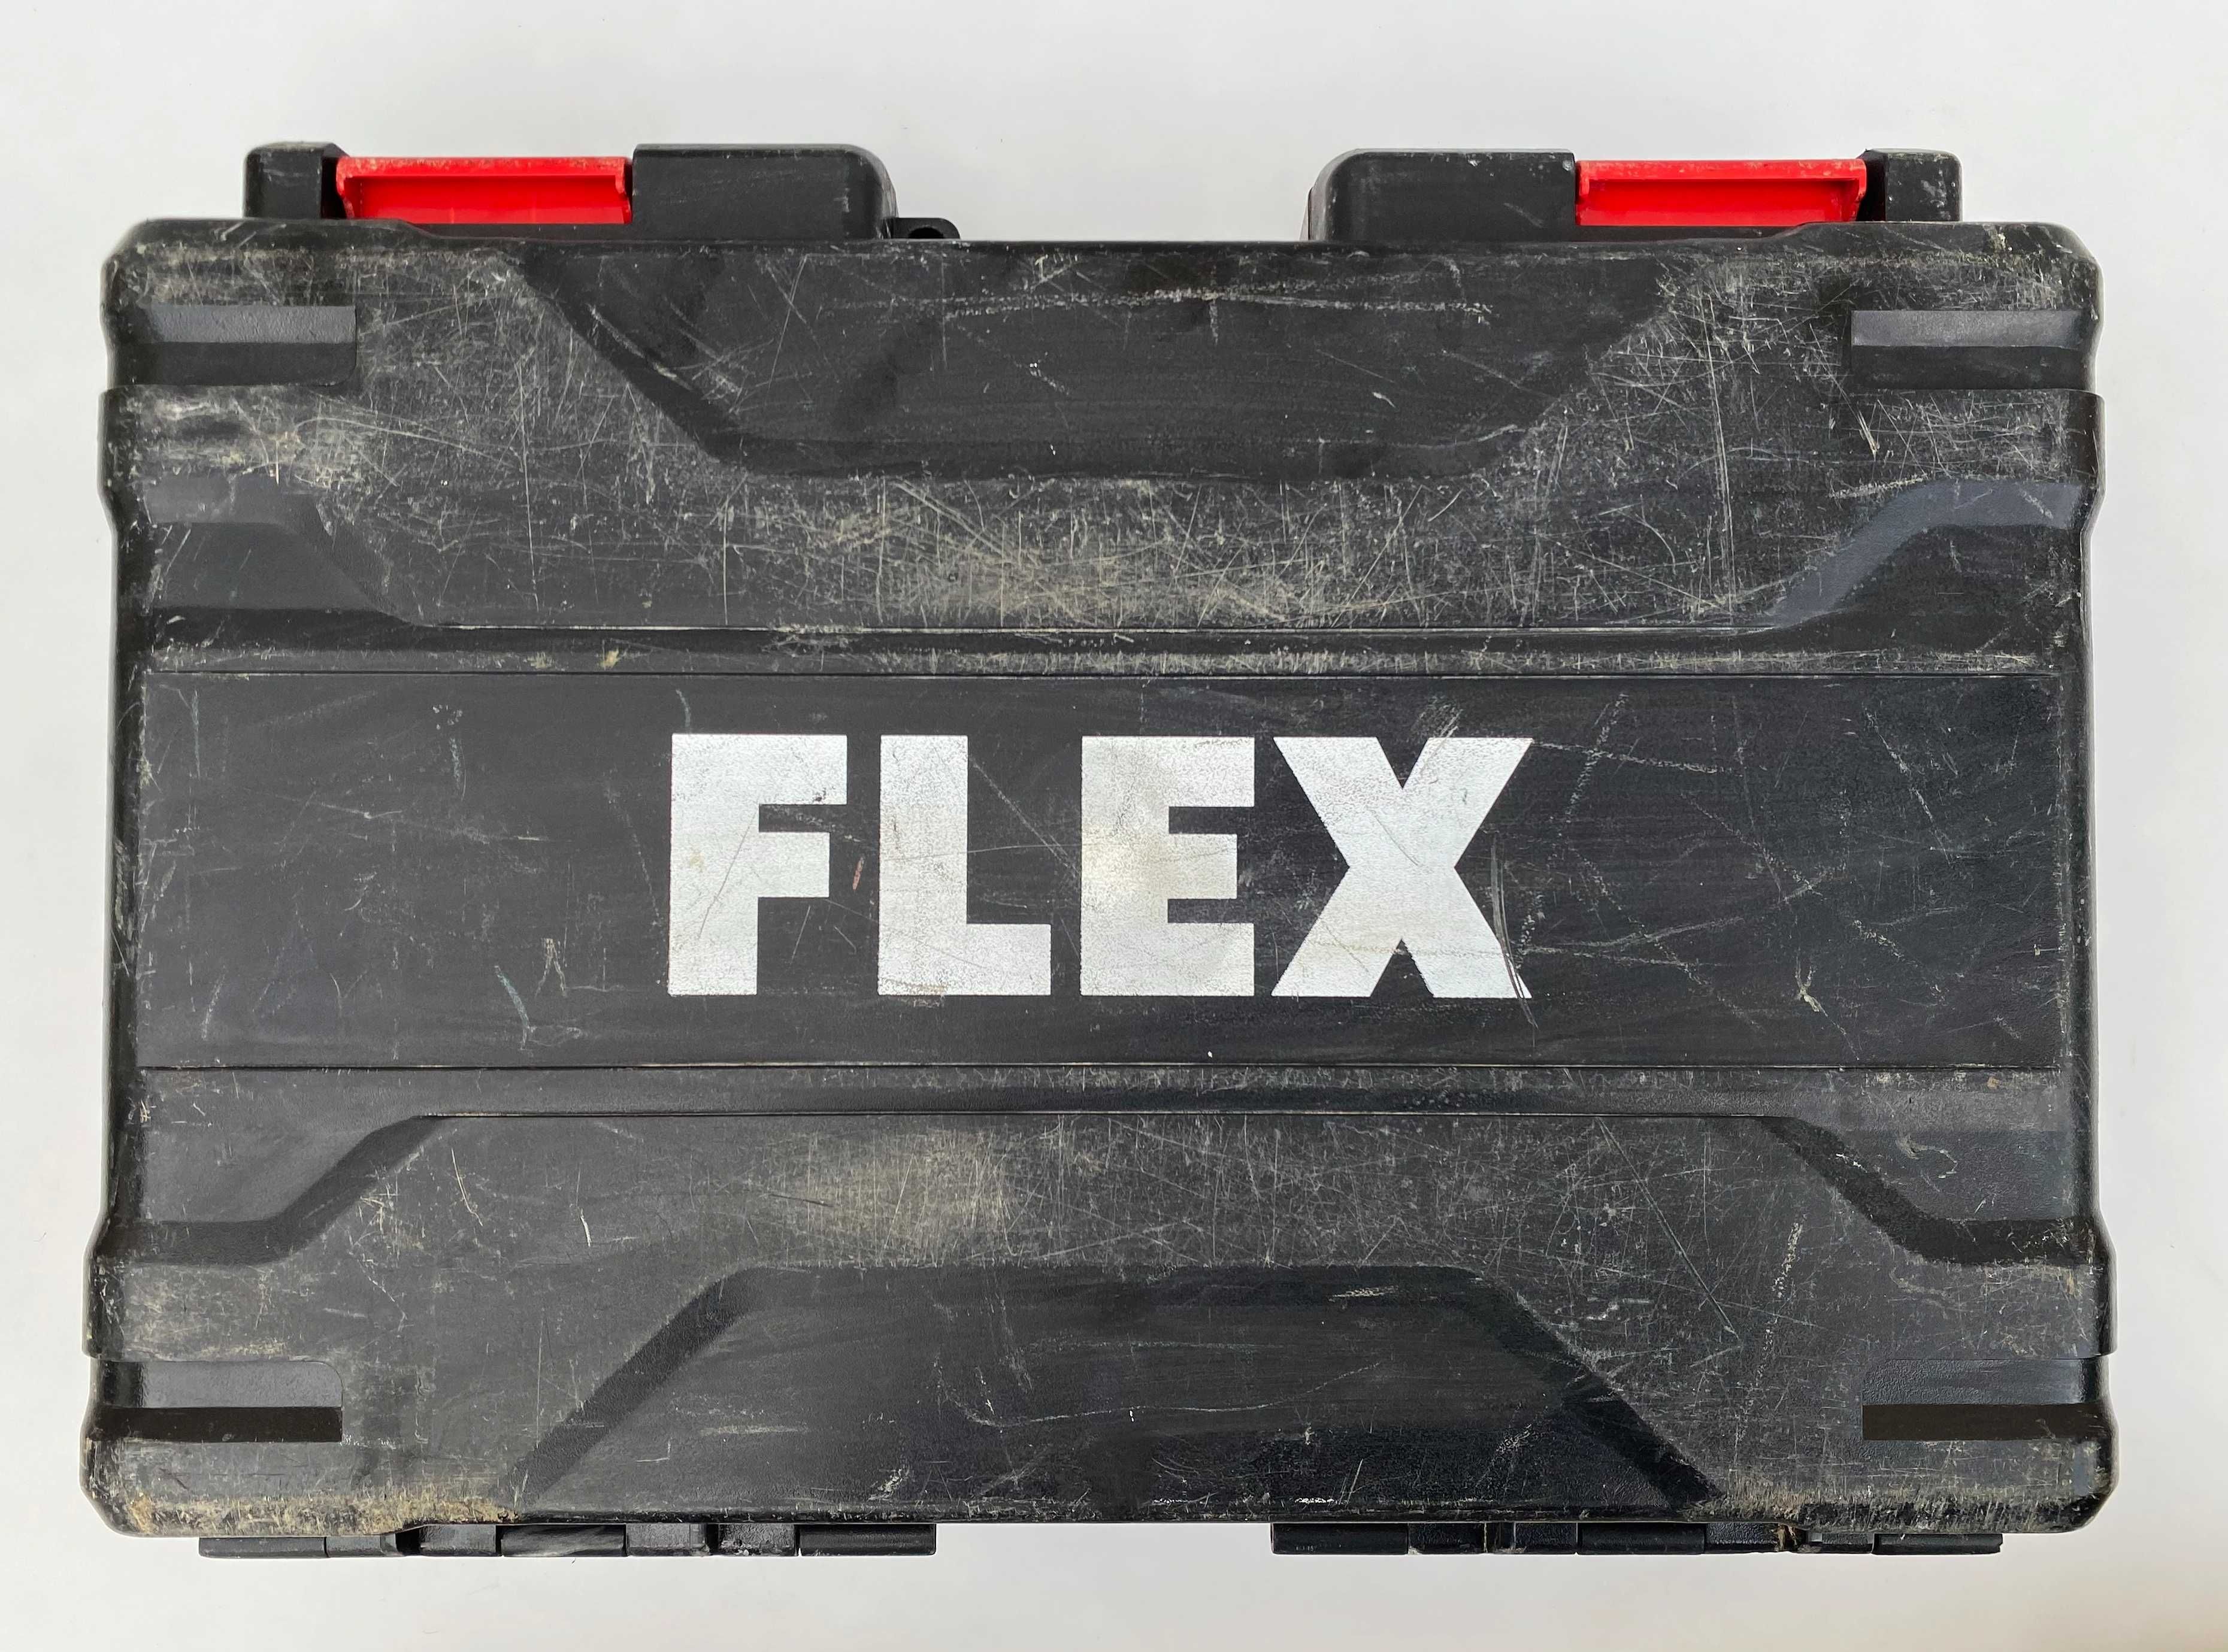 FLEX DH 5 SDS-max - Чист къртач 1050W 6.7J